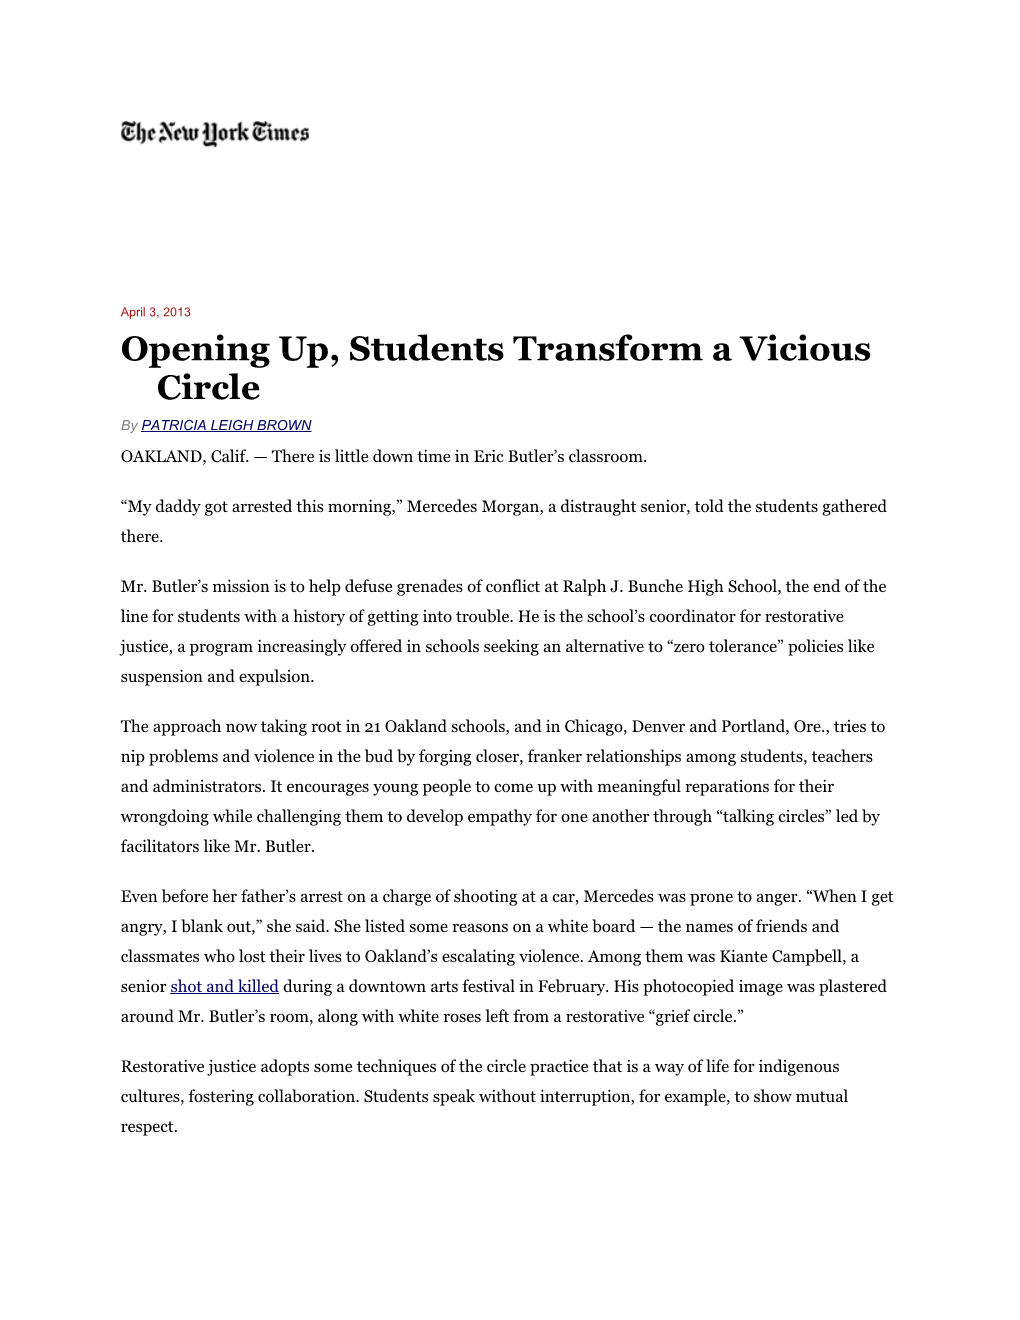 Opening Up, Students Transform a Vicious Circle